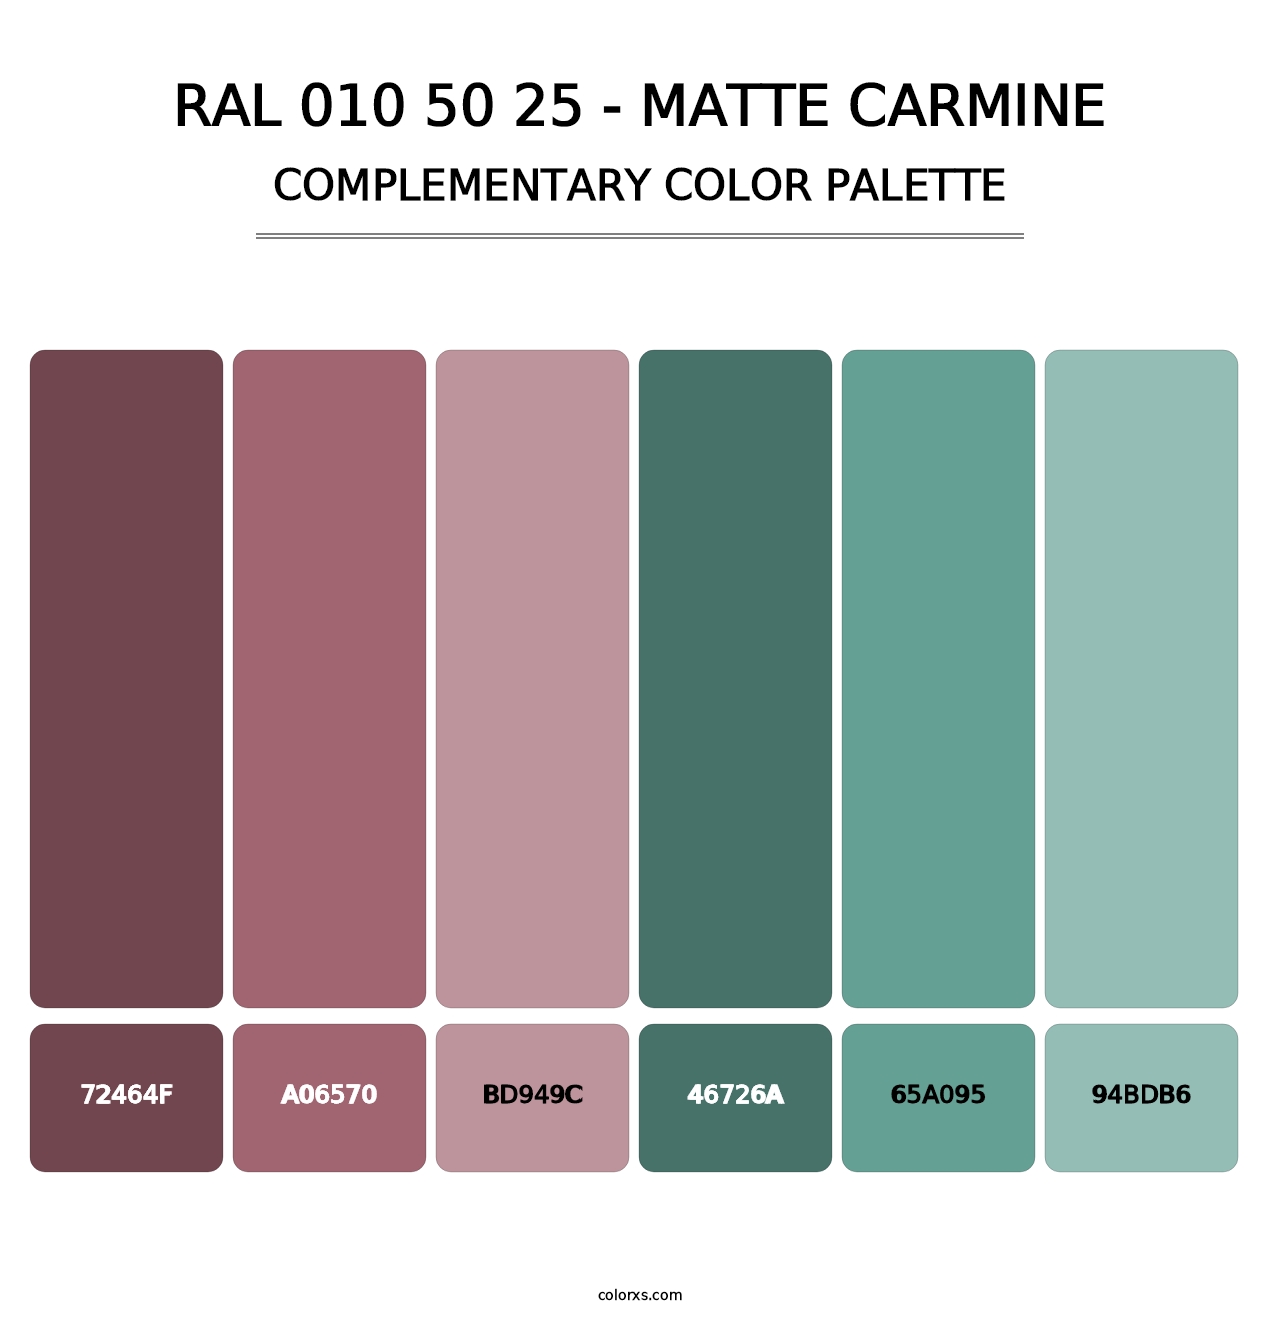 RAL 010 50 25 - Matte Carmine - Complementary Color Palette